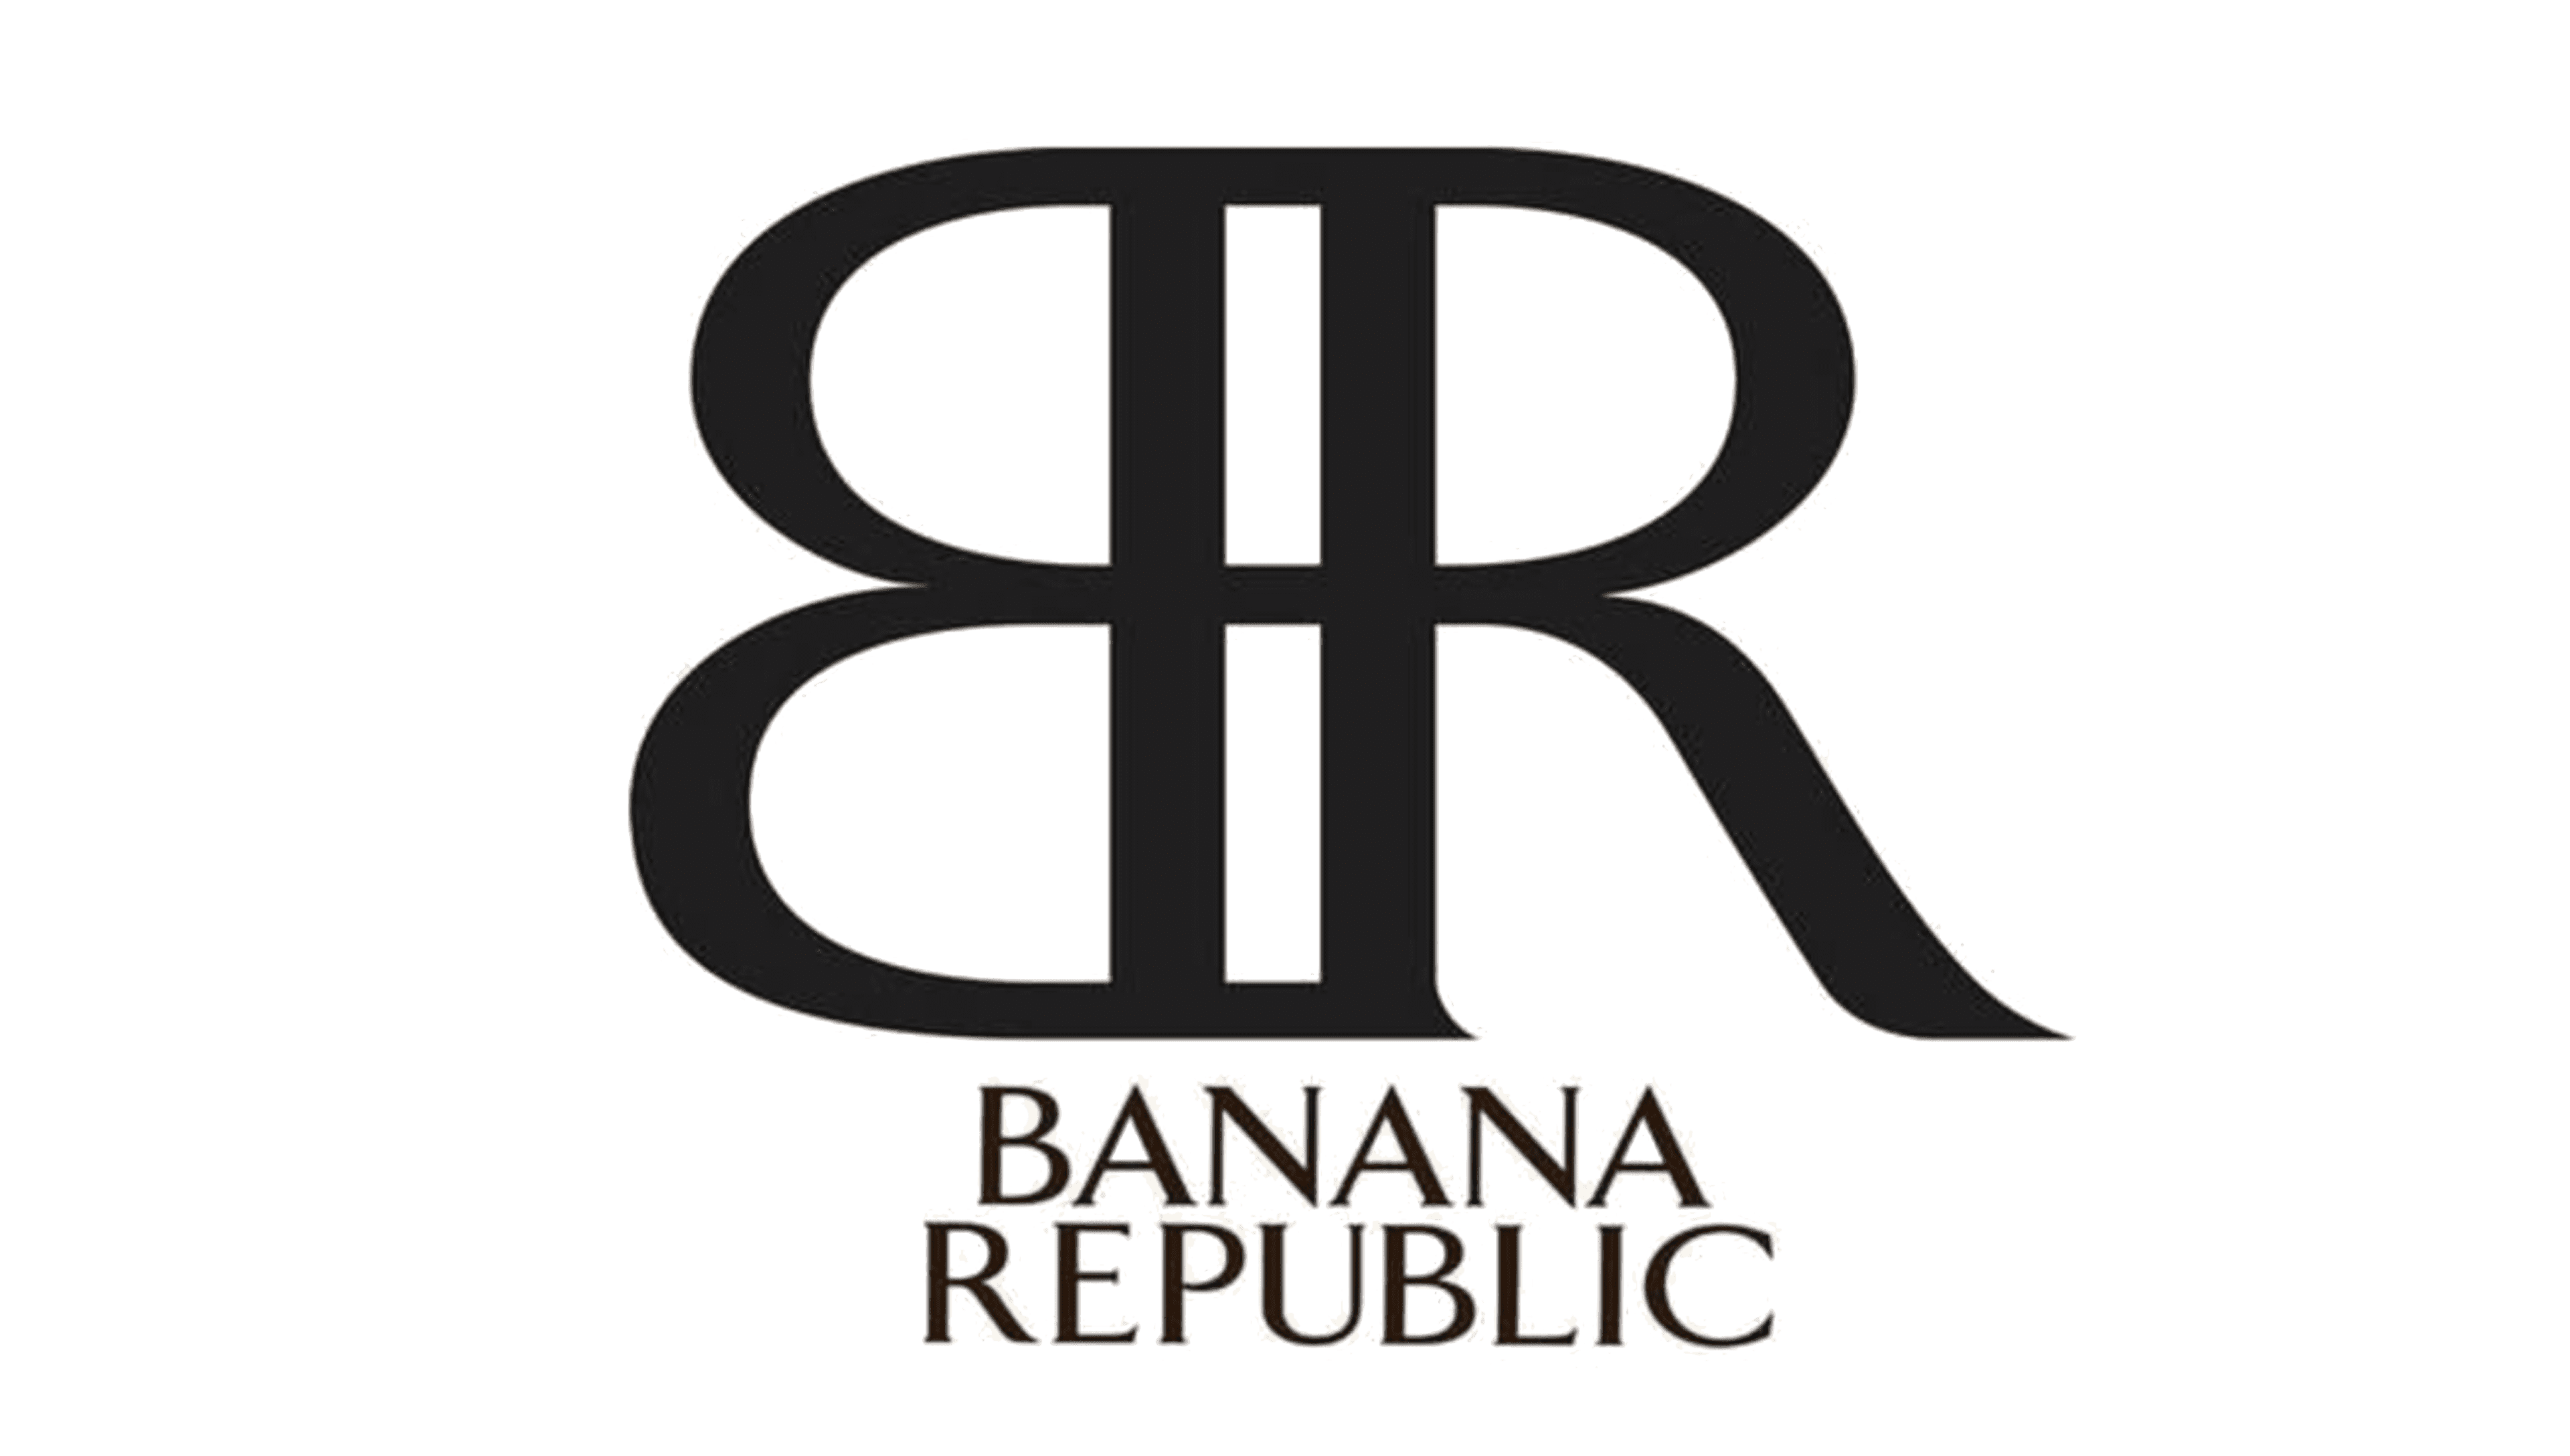 Banana-Republic-logo.png